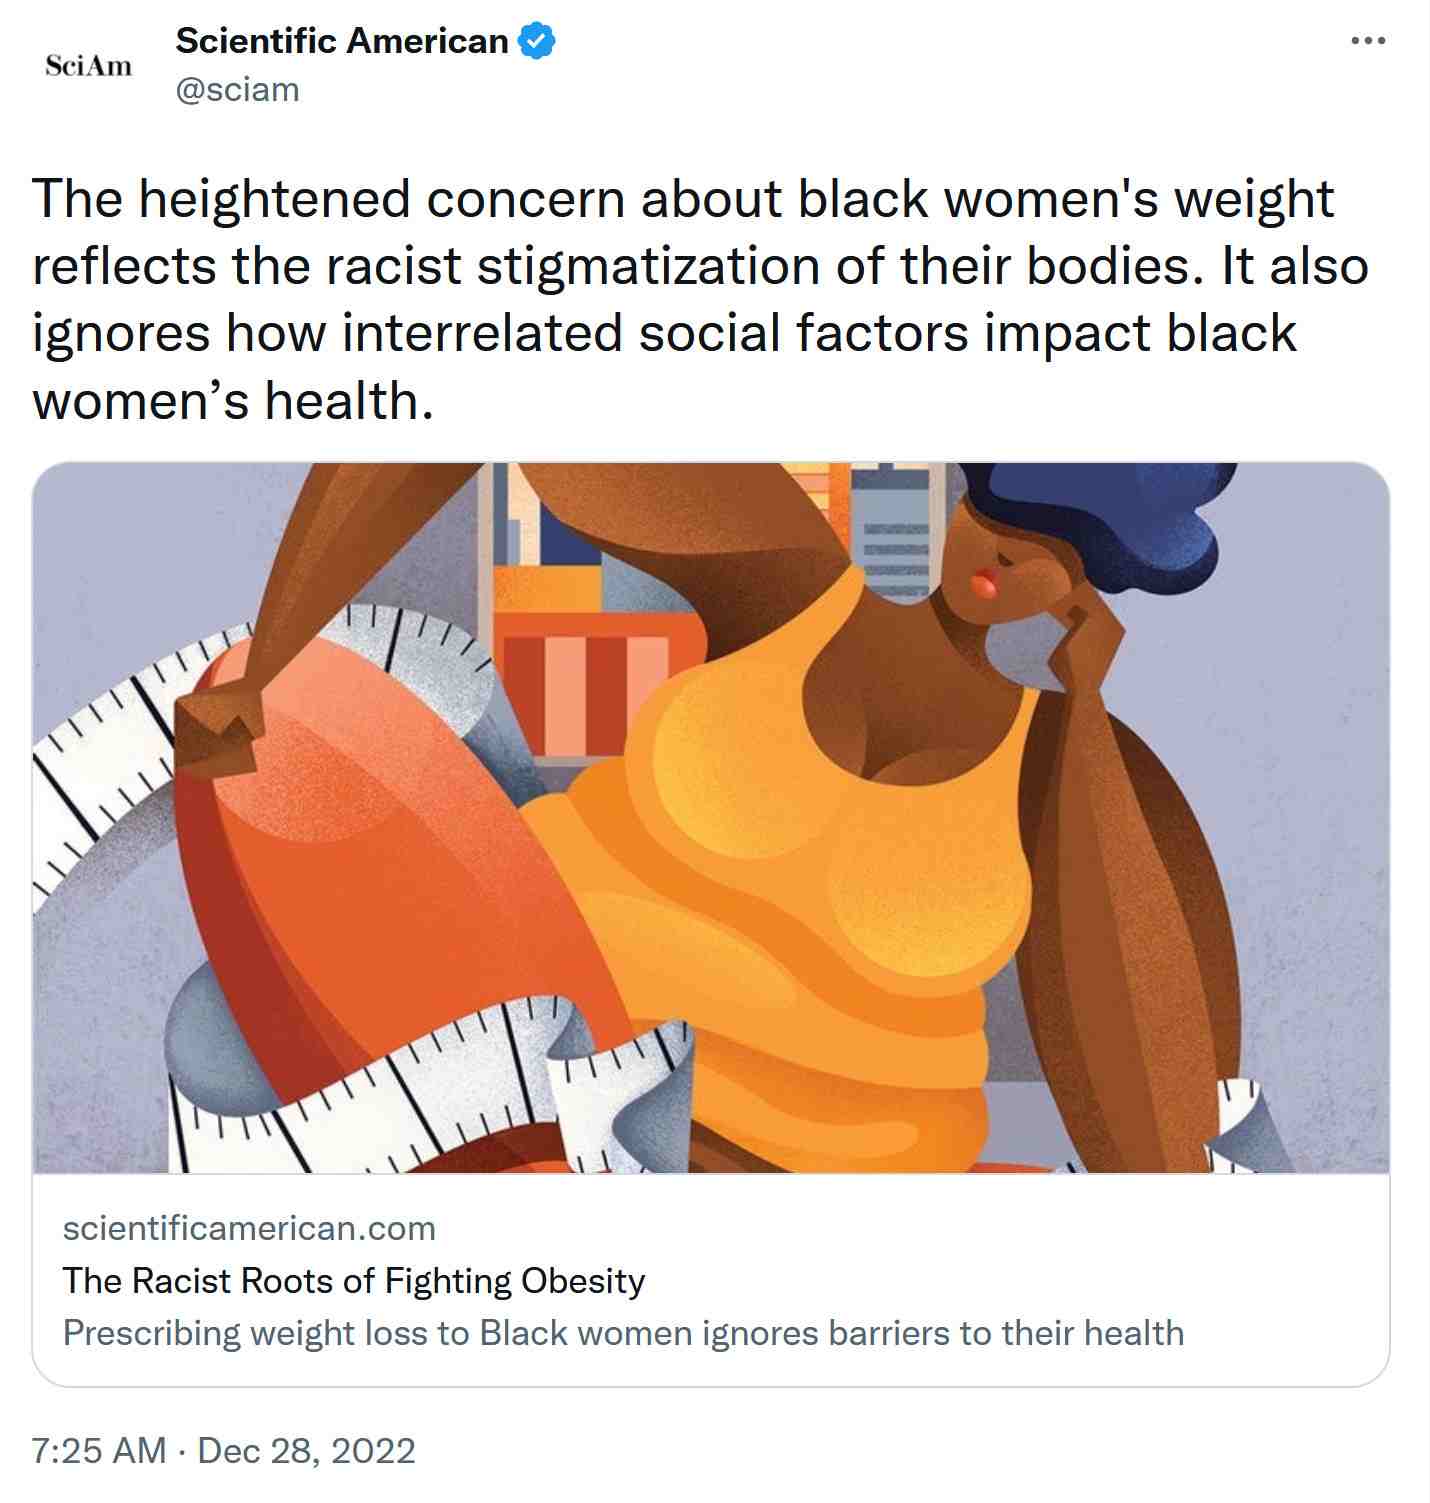 scientific_american_obesity_racist_12-28-2022.jpg